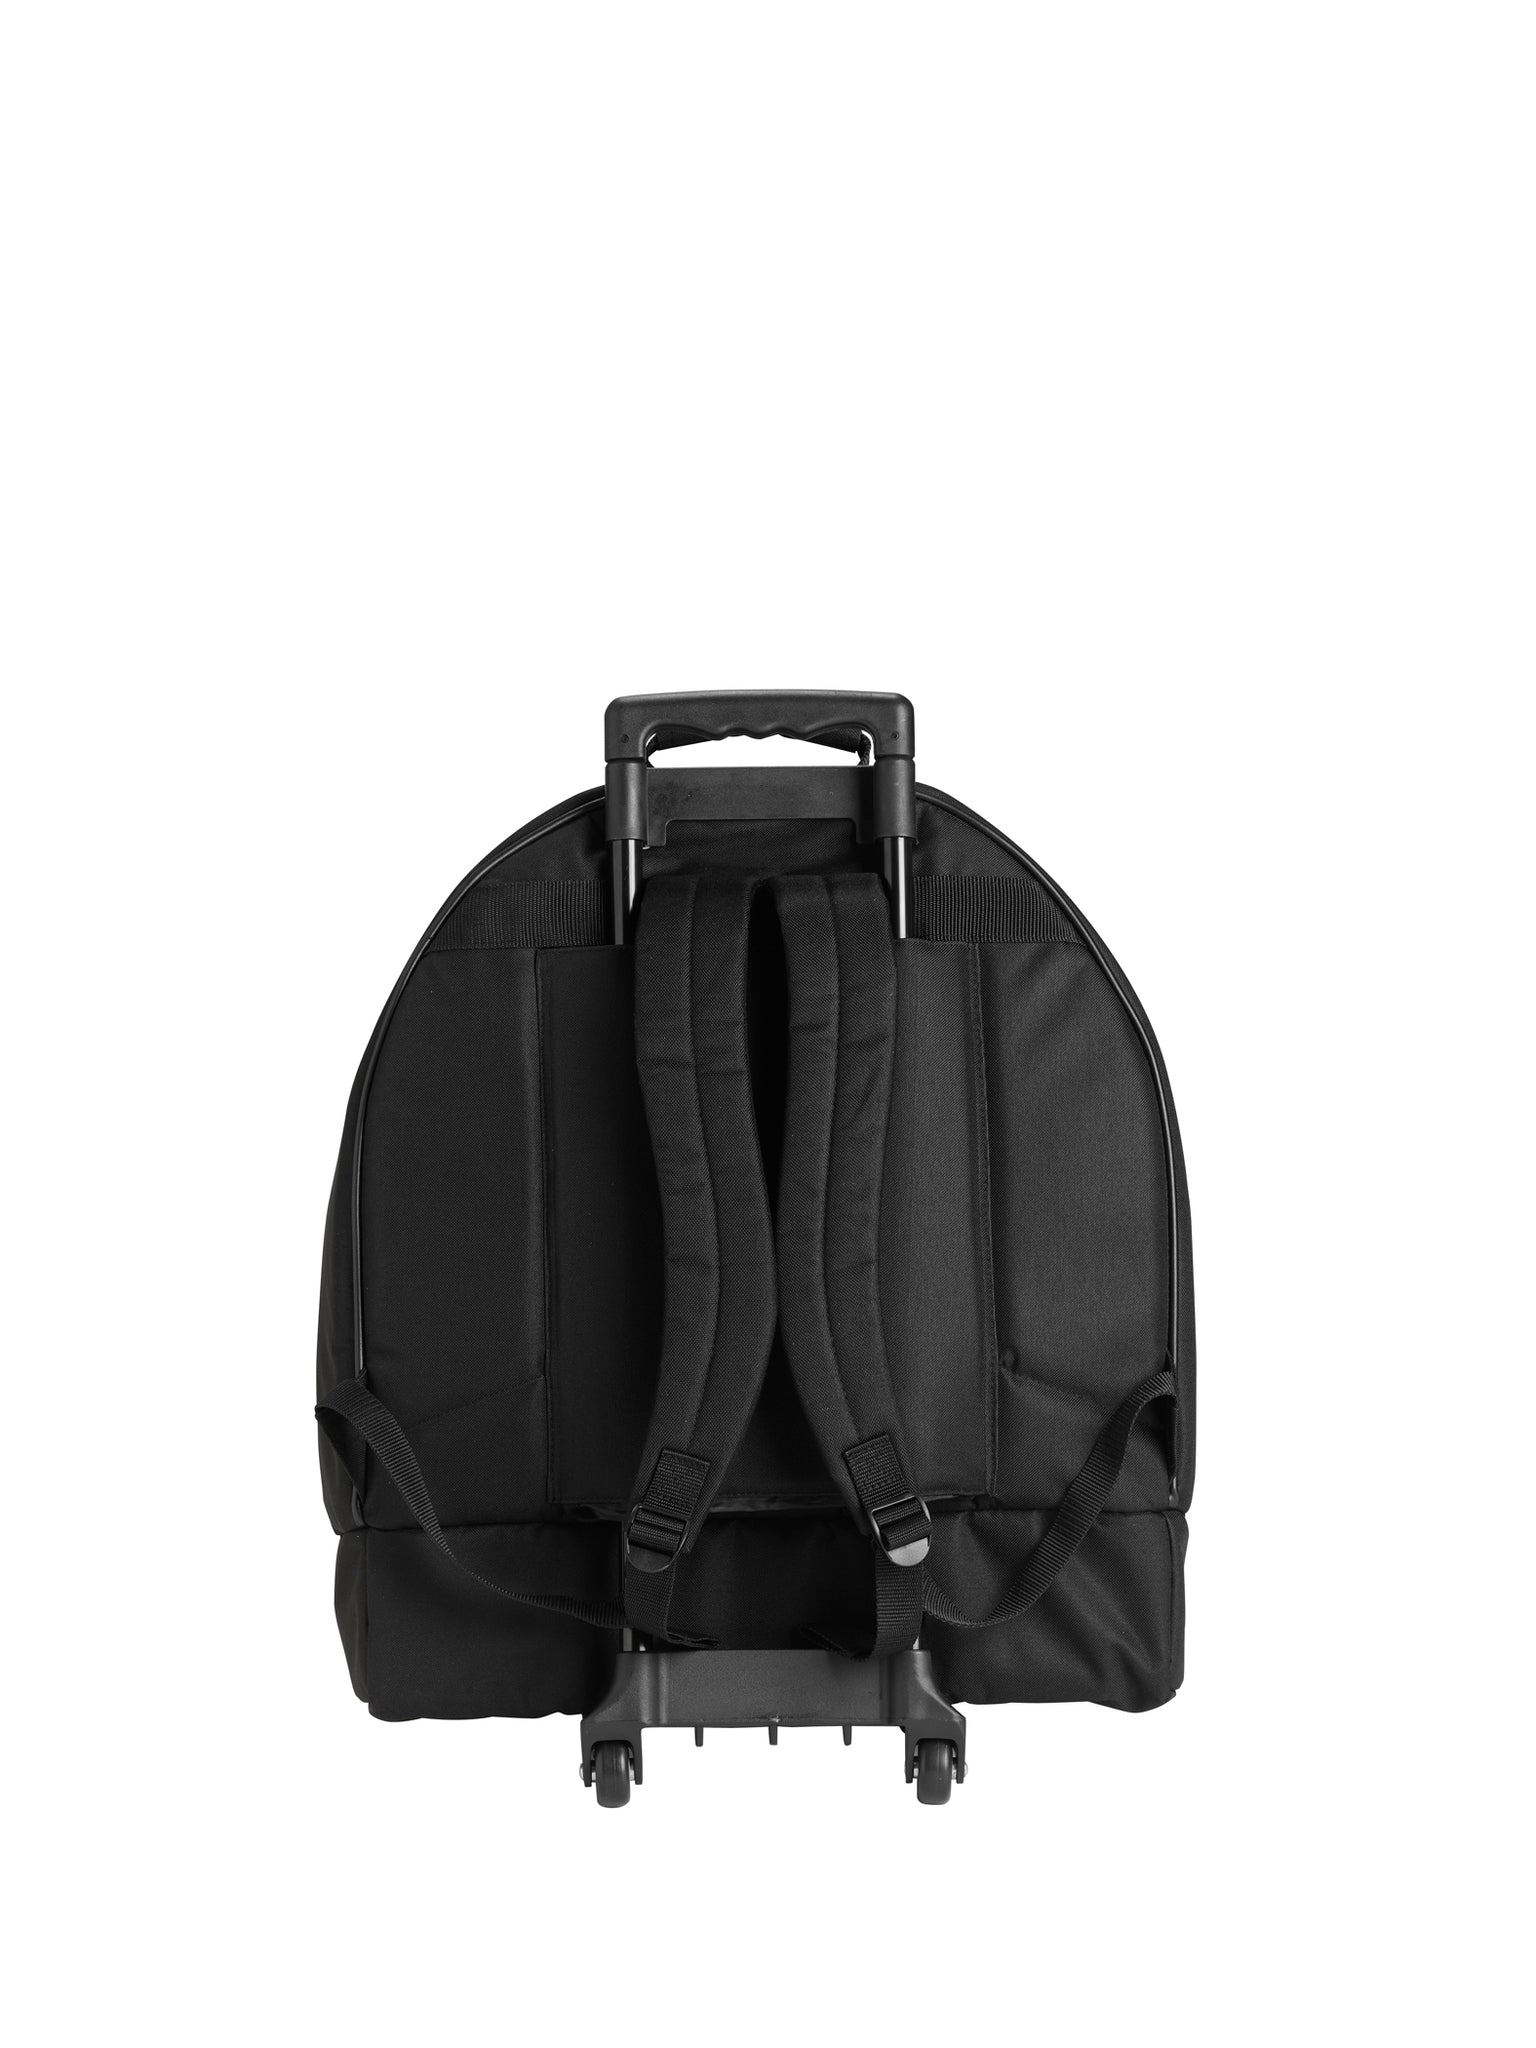 SNARE DRUM Kit Porter – Kaces Bags & Cases